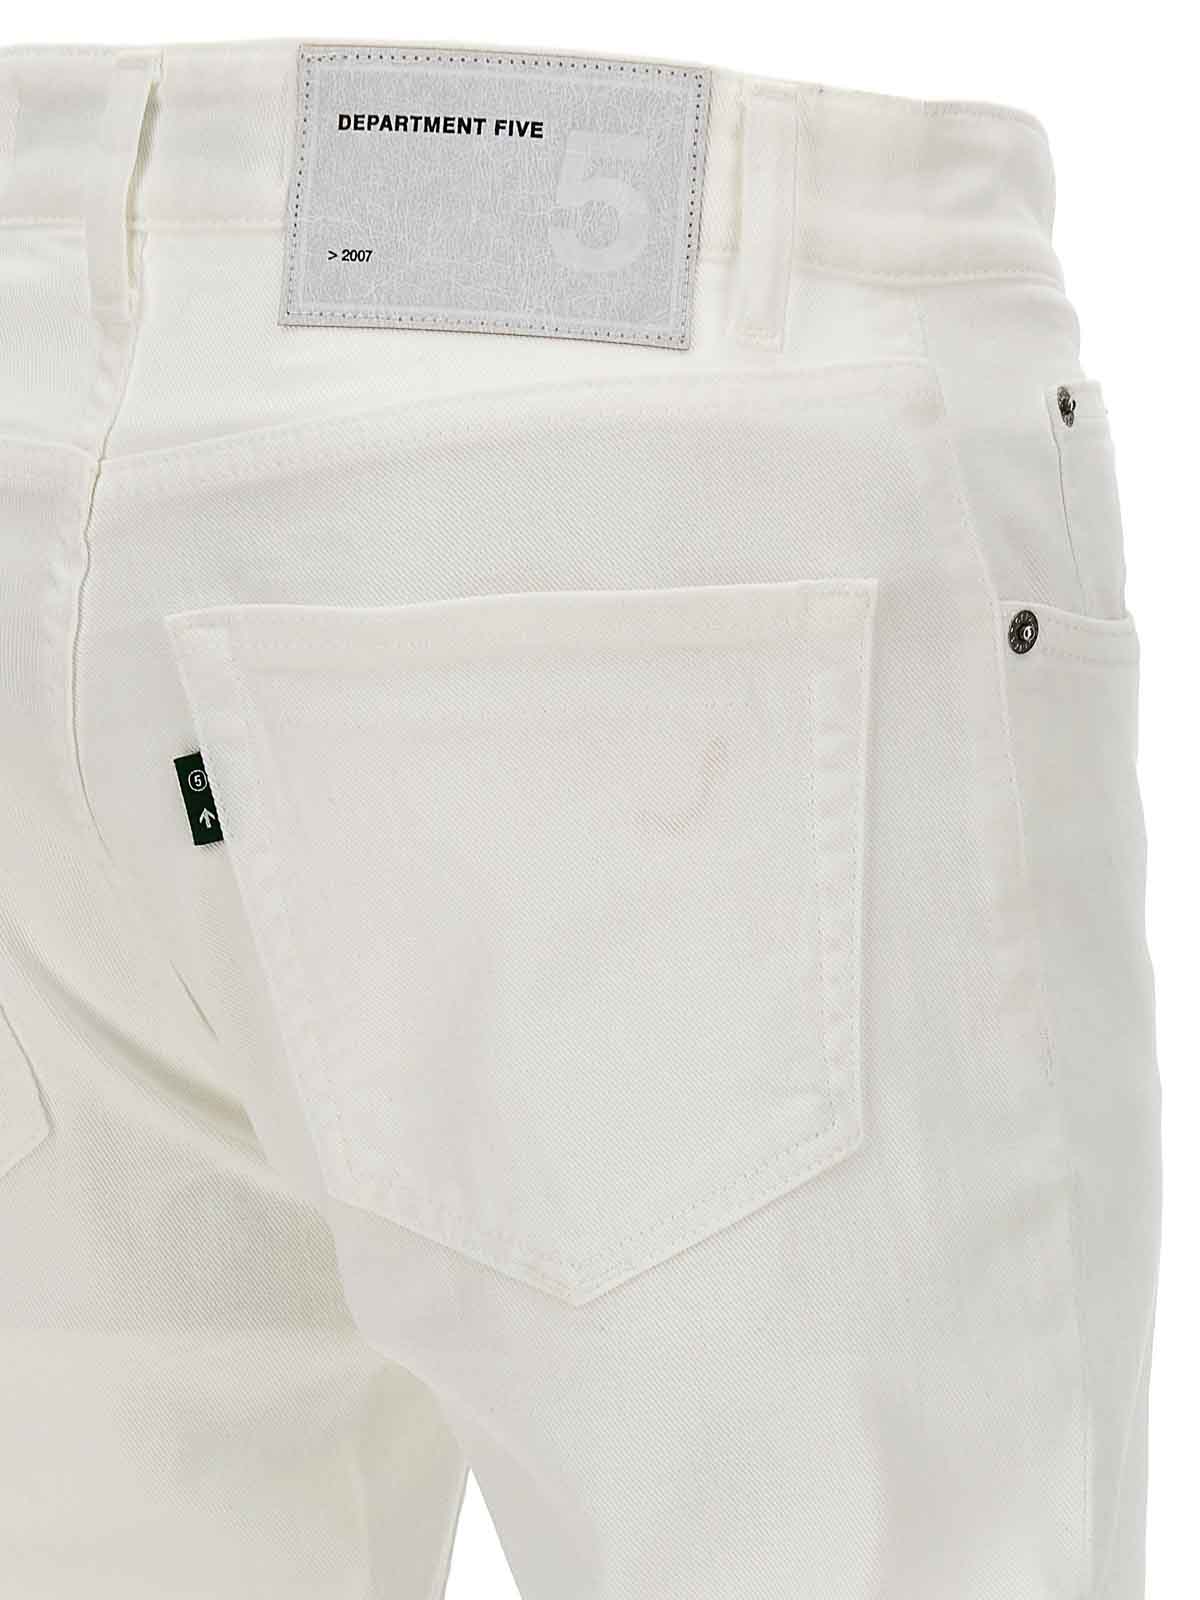 Shop Department 5 Skeith Stretch Denim Jeans Zip In Blanco